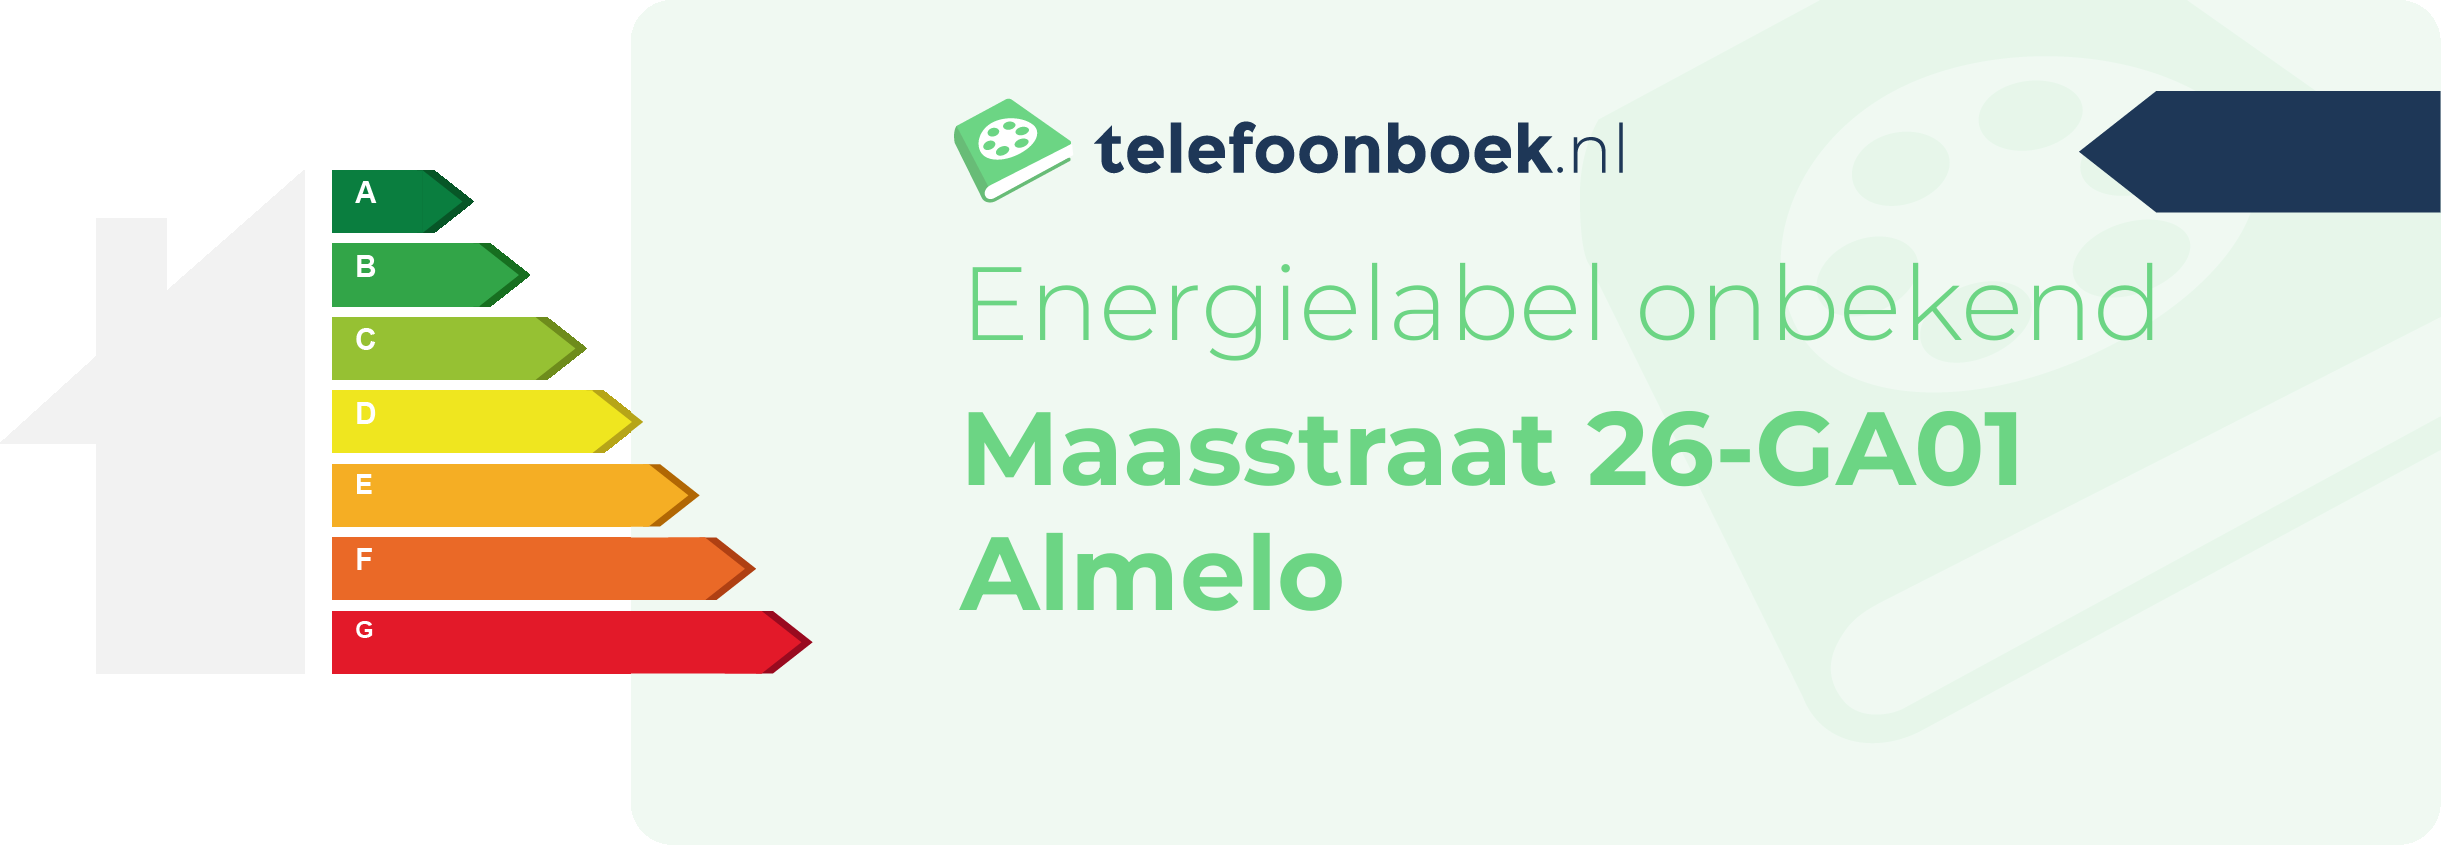 Energielabel Maasstraat 26-GA01 Almelo